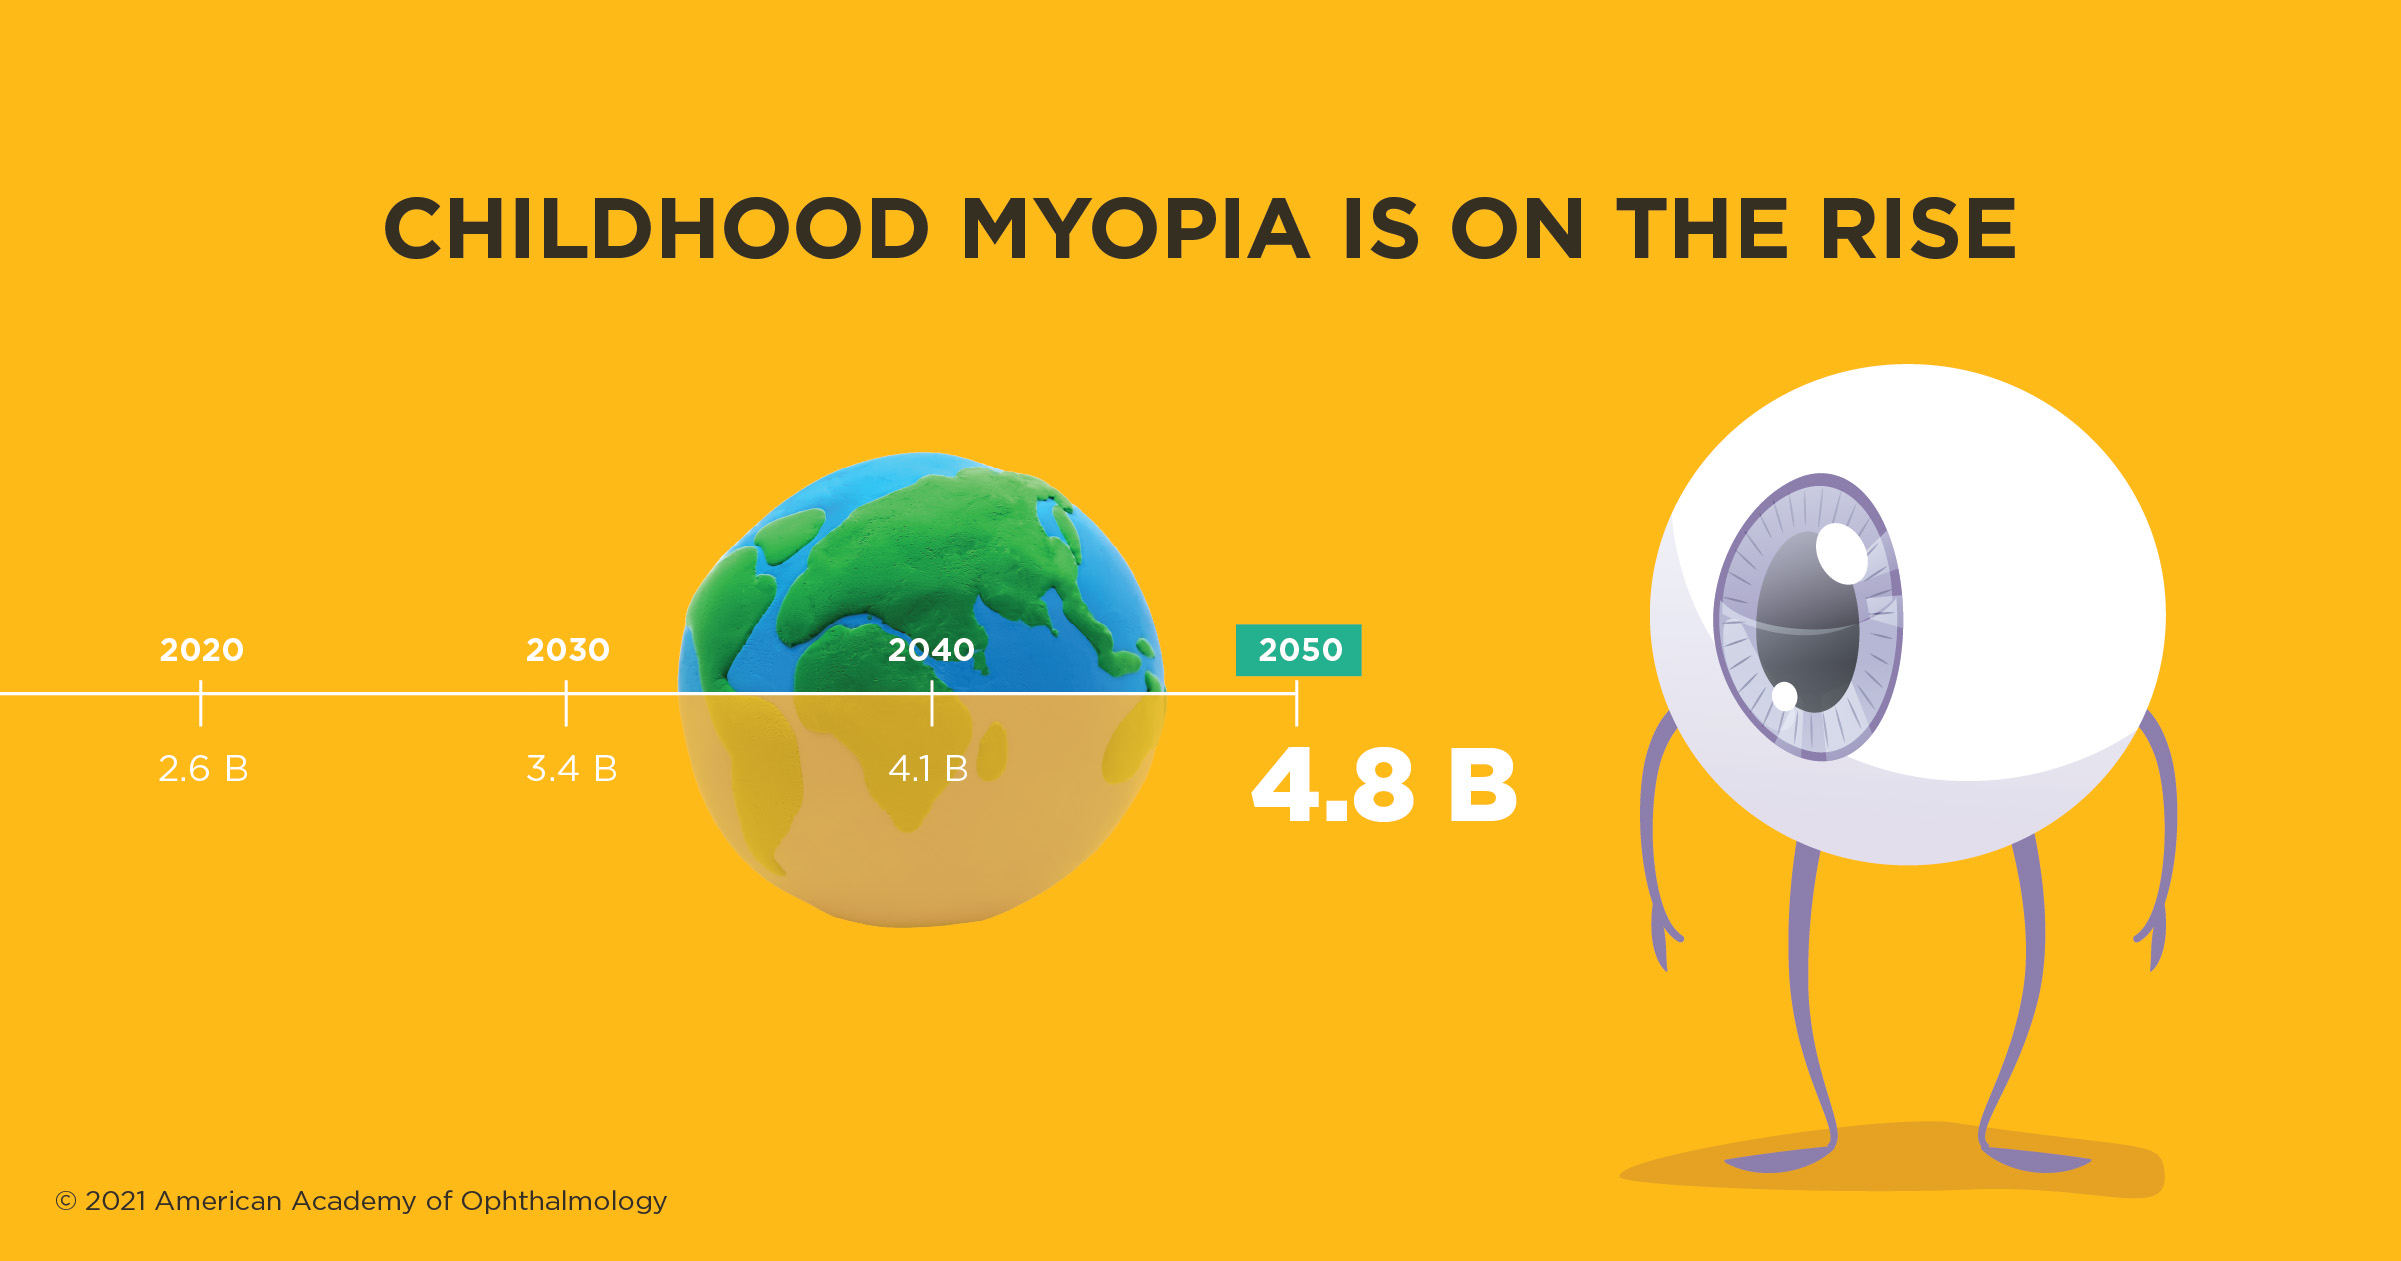 Childhood myopia is on the rise